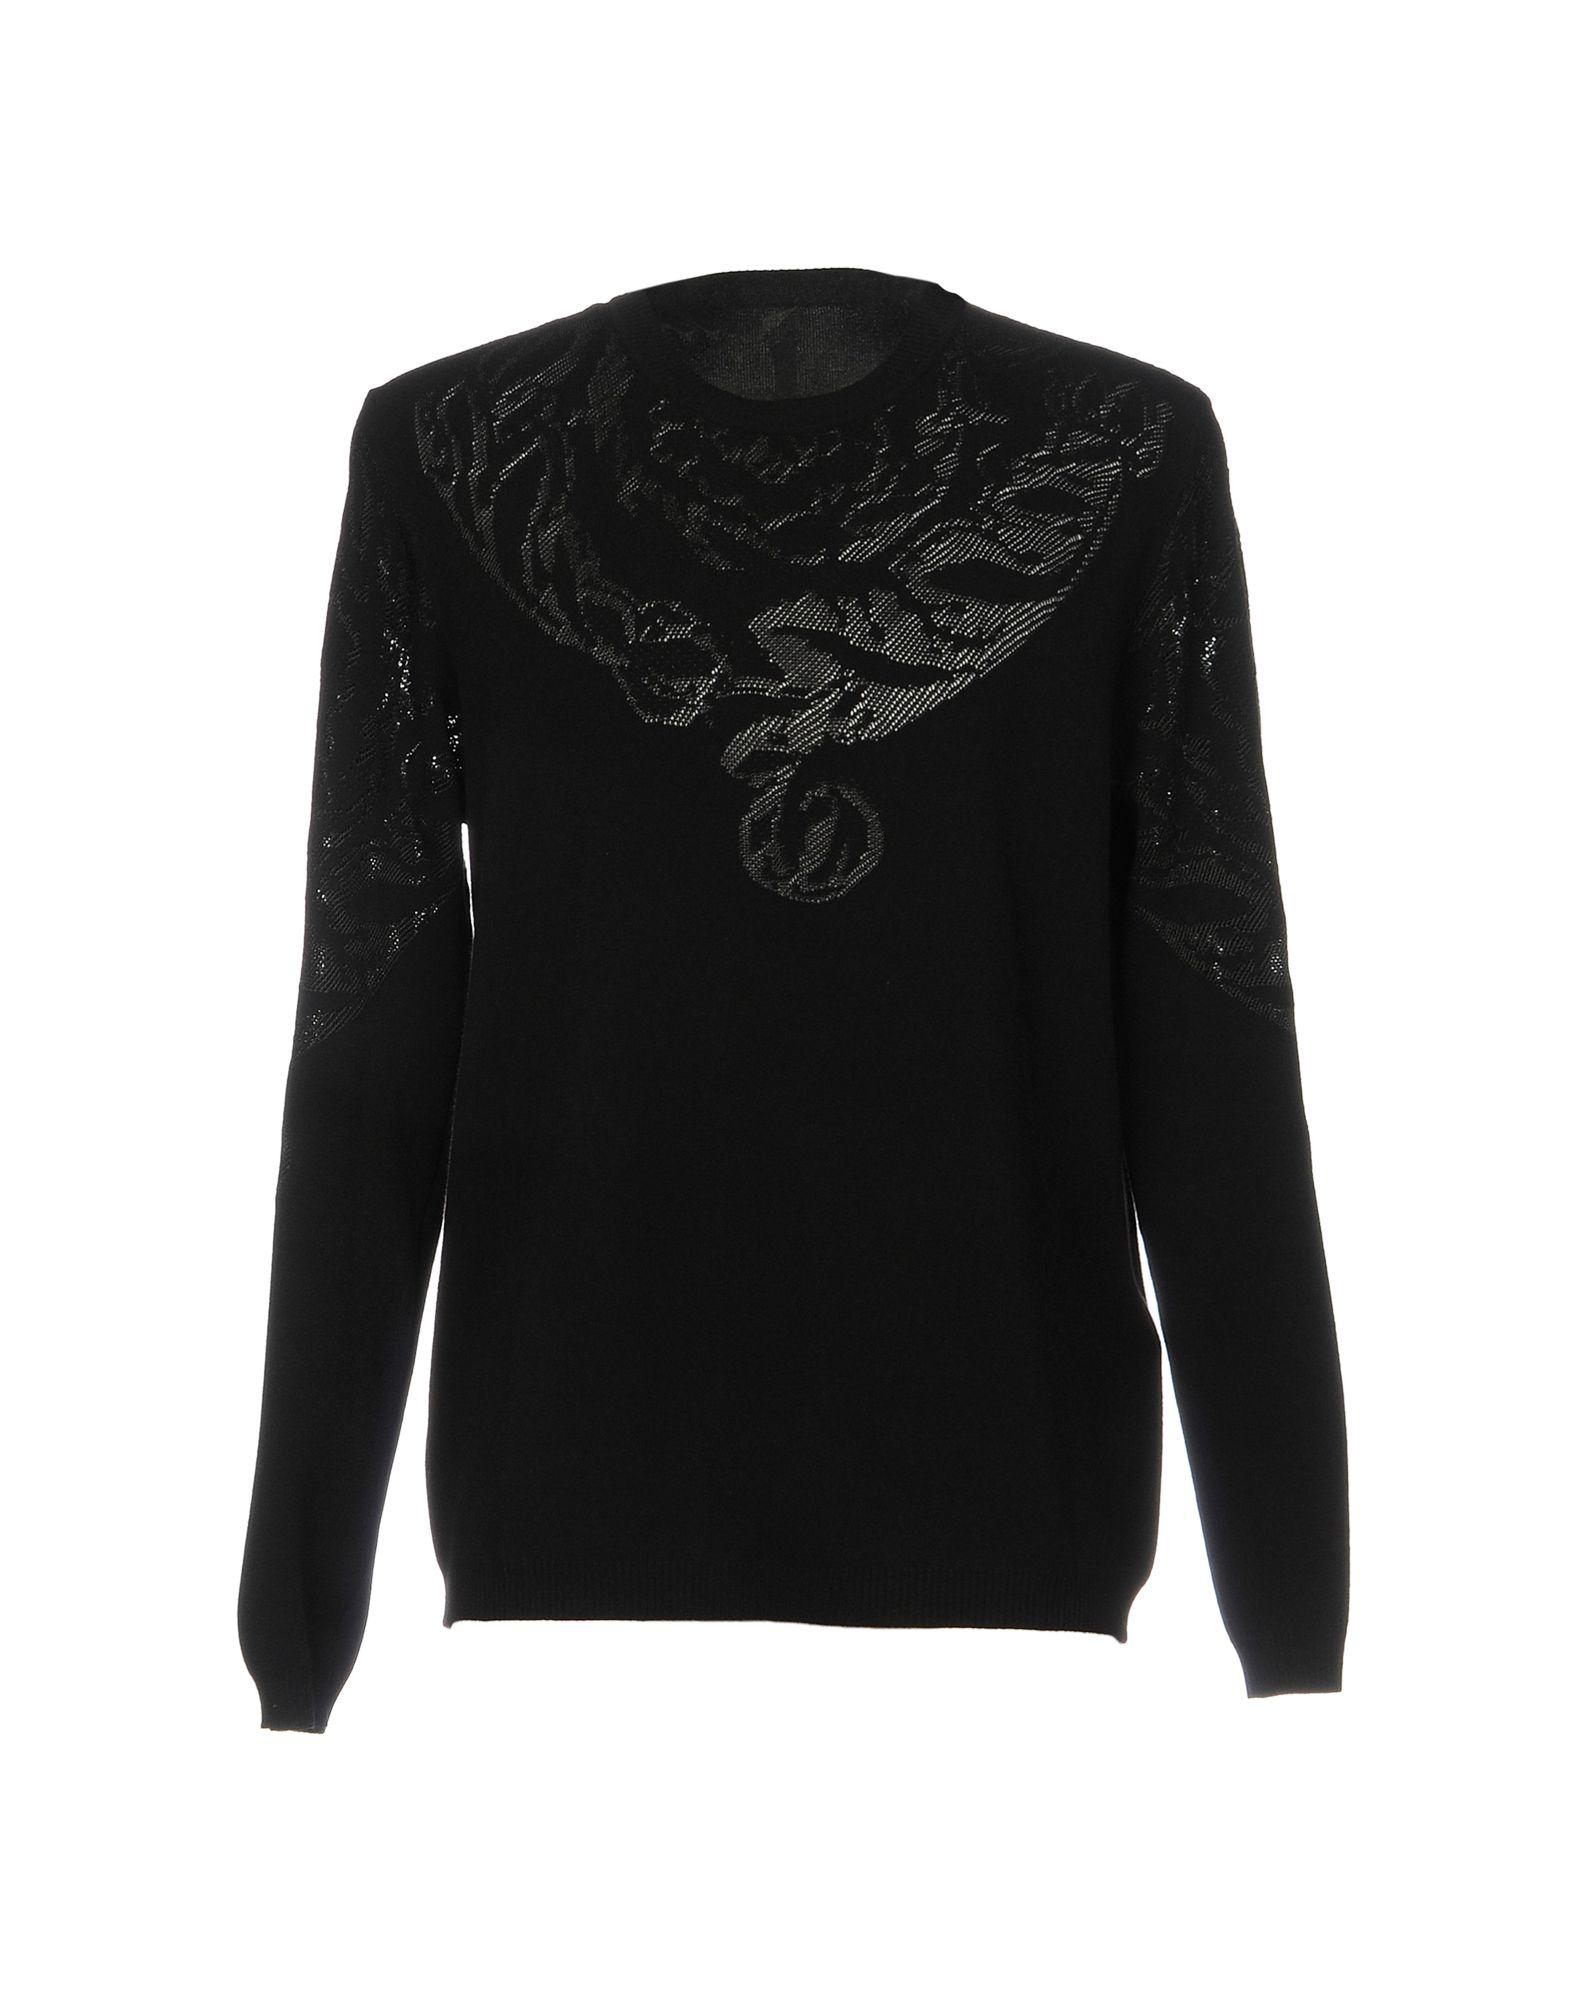 Lyst - Versace Sweater in Black for Men